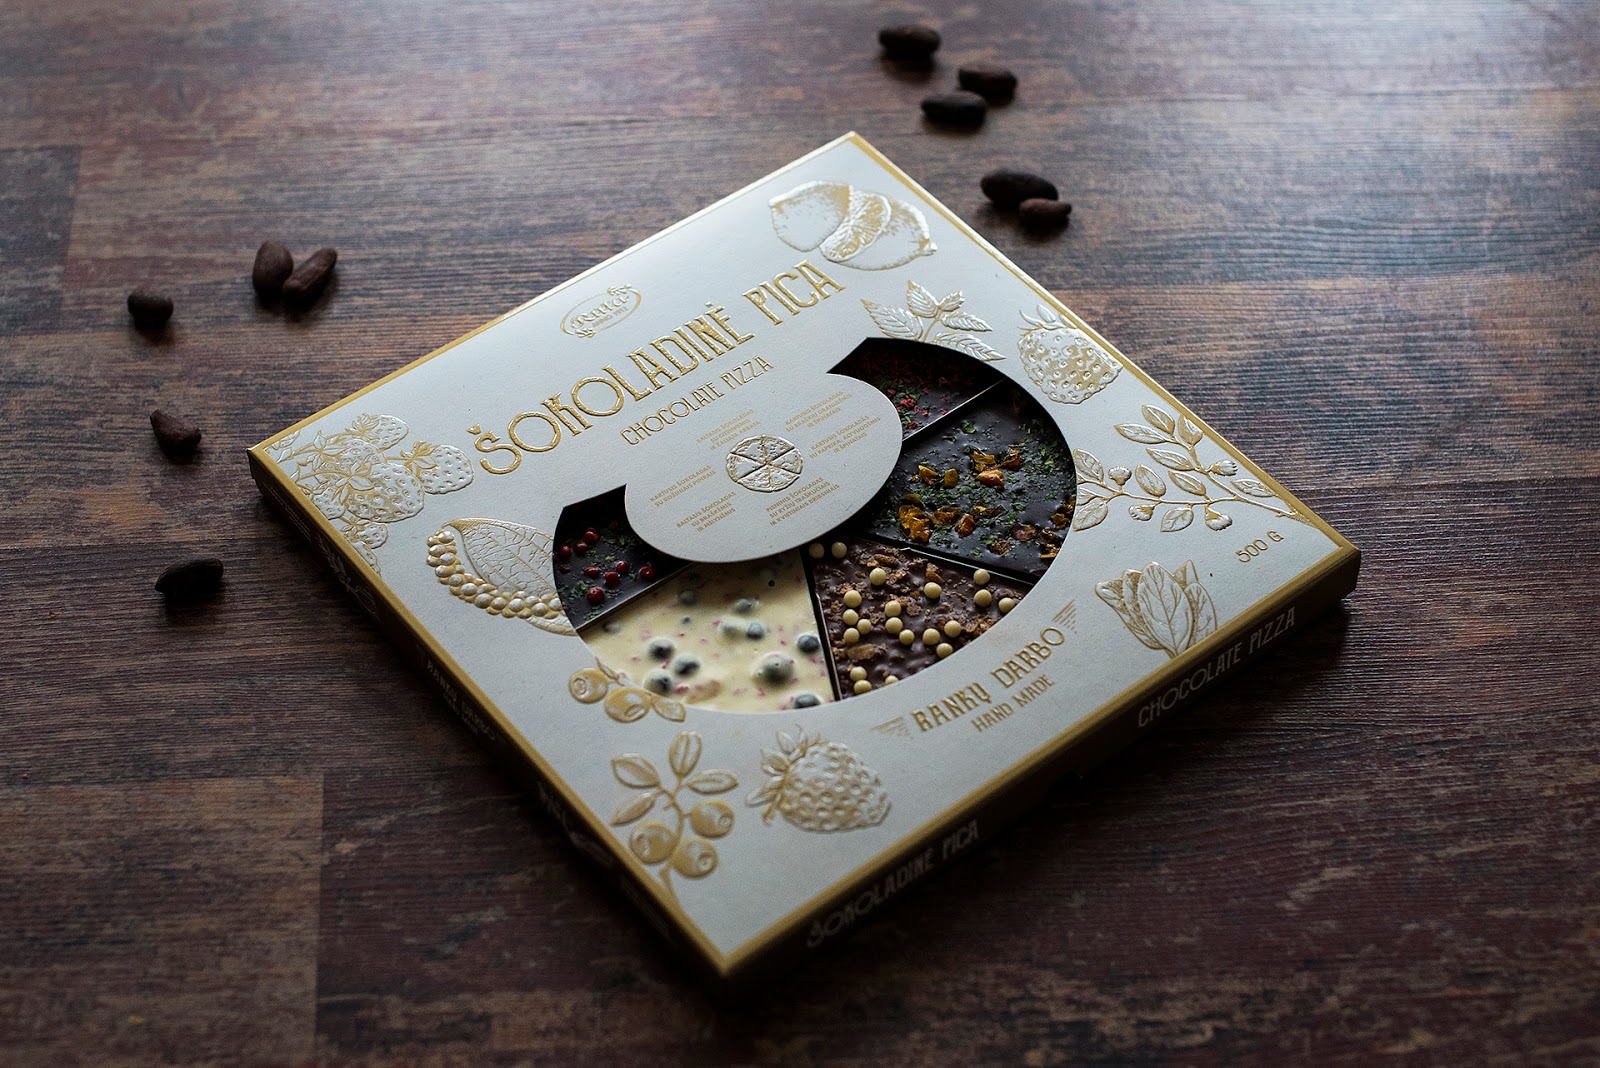 Rūta巧克力比萨包装设计